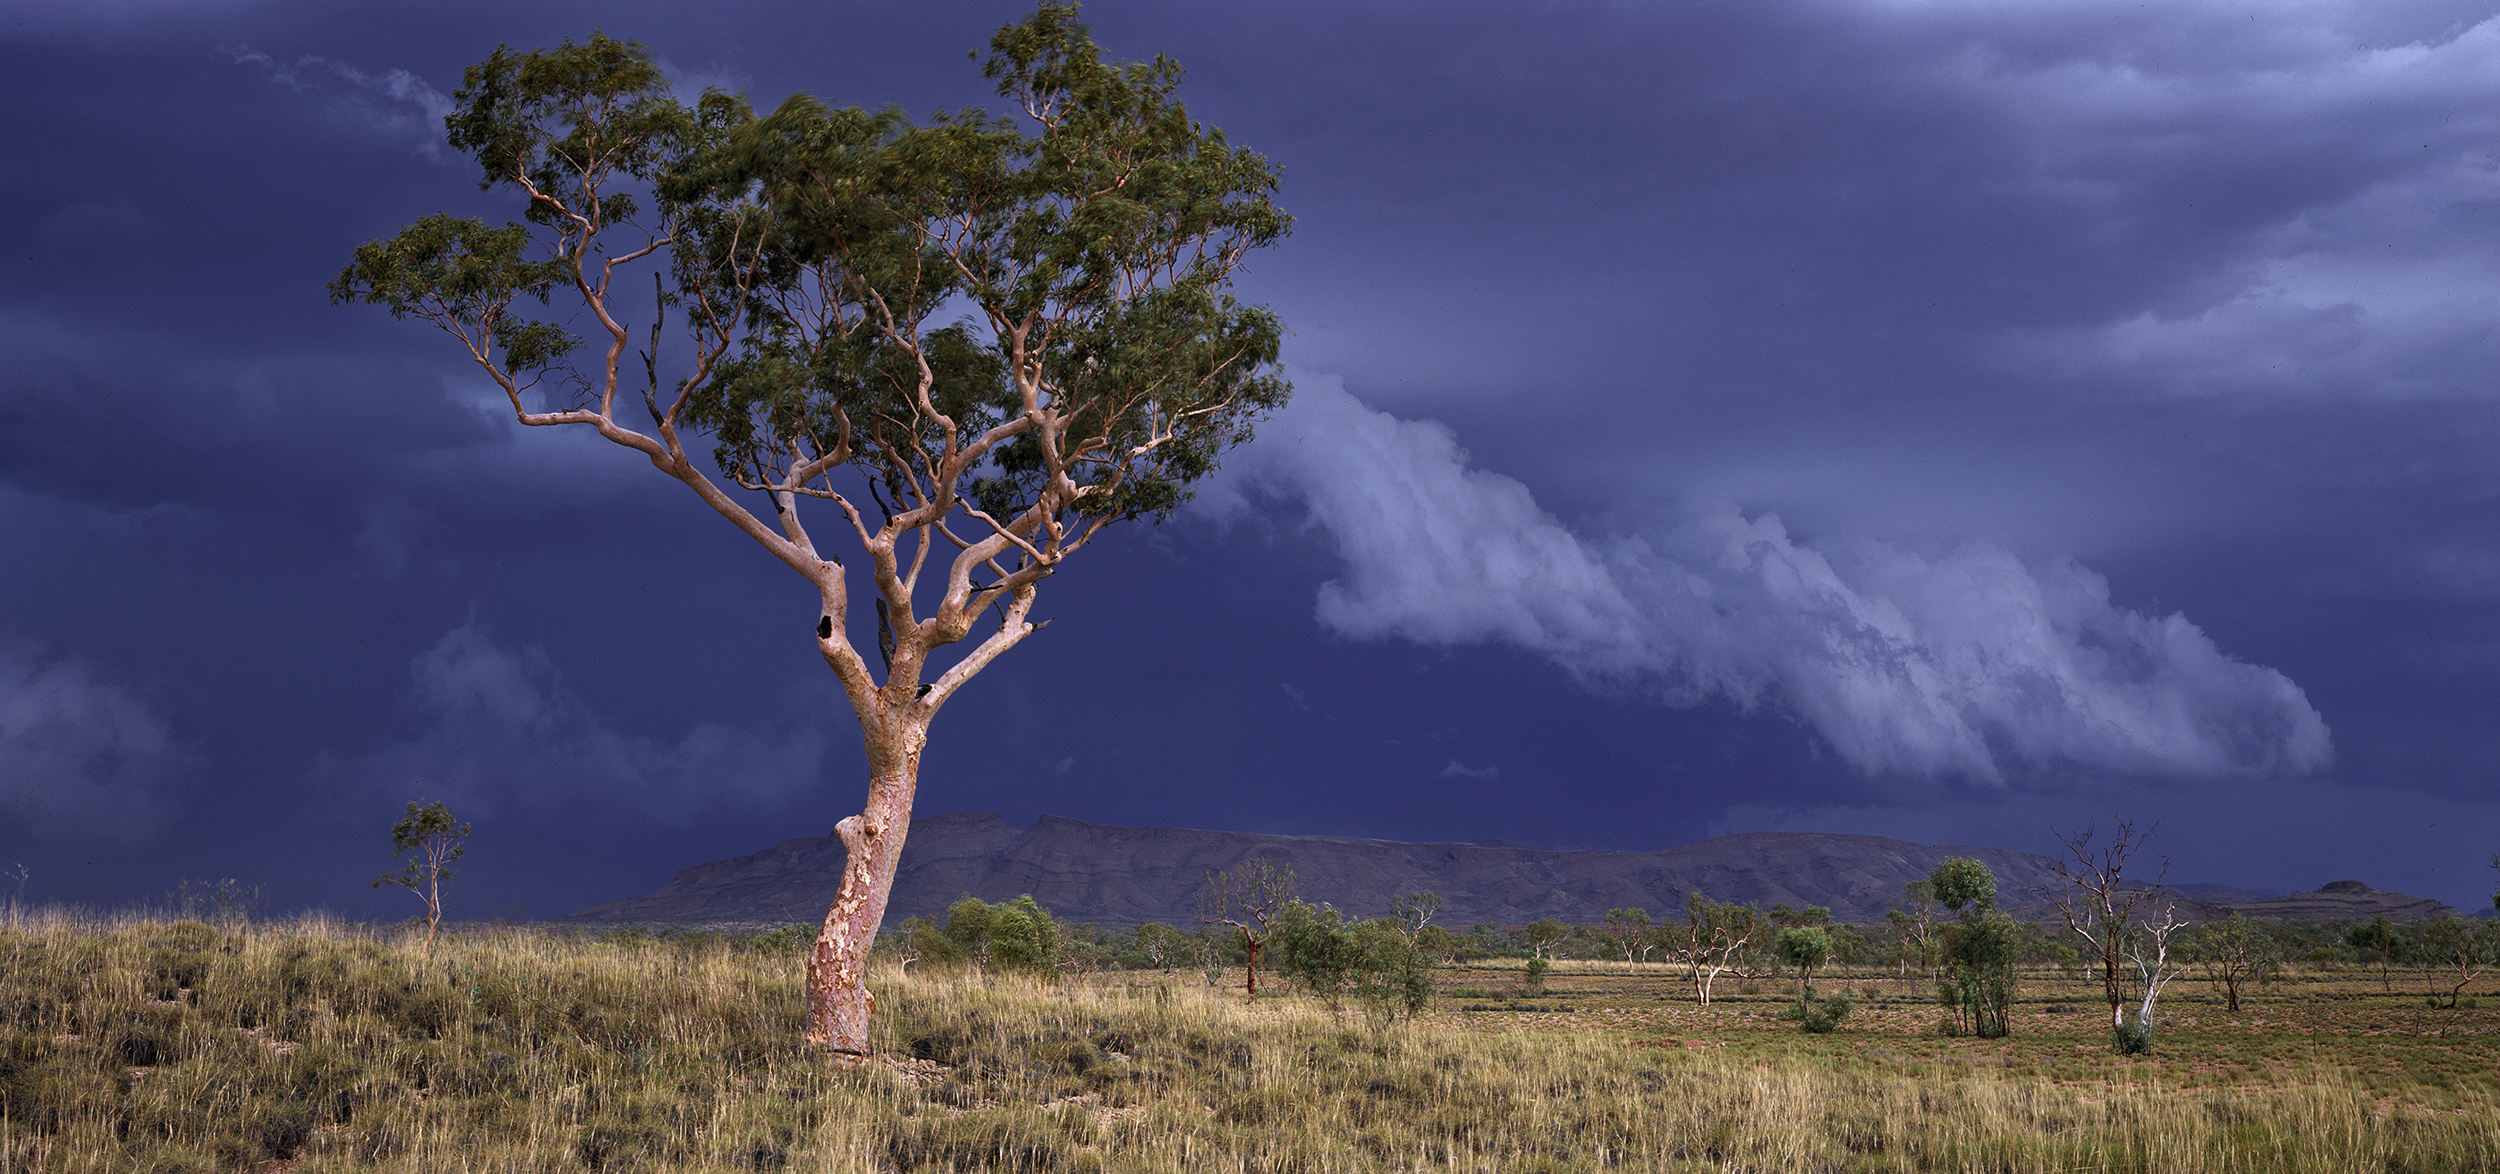  Summer Storm Squall, Near Mt Farquhar, Hamersley Range, Western Australia, 2015.&nbsp; Edition of 3. 